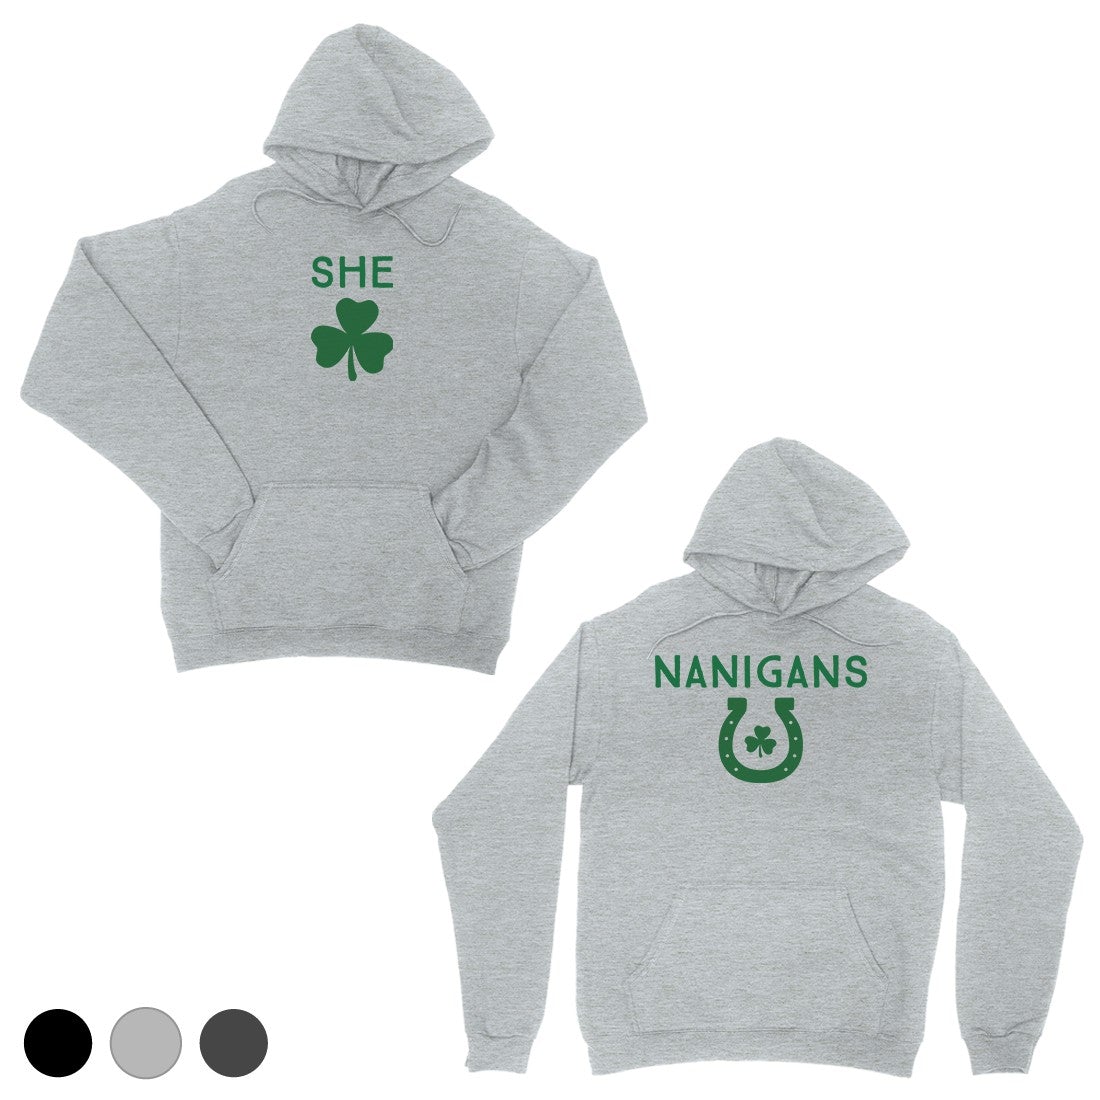 Shenanigans Matching Pullover Hoodies Gray Funny Irish Friend Gift